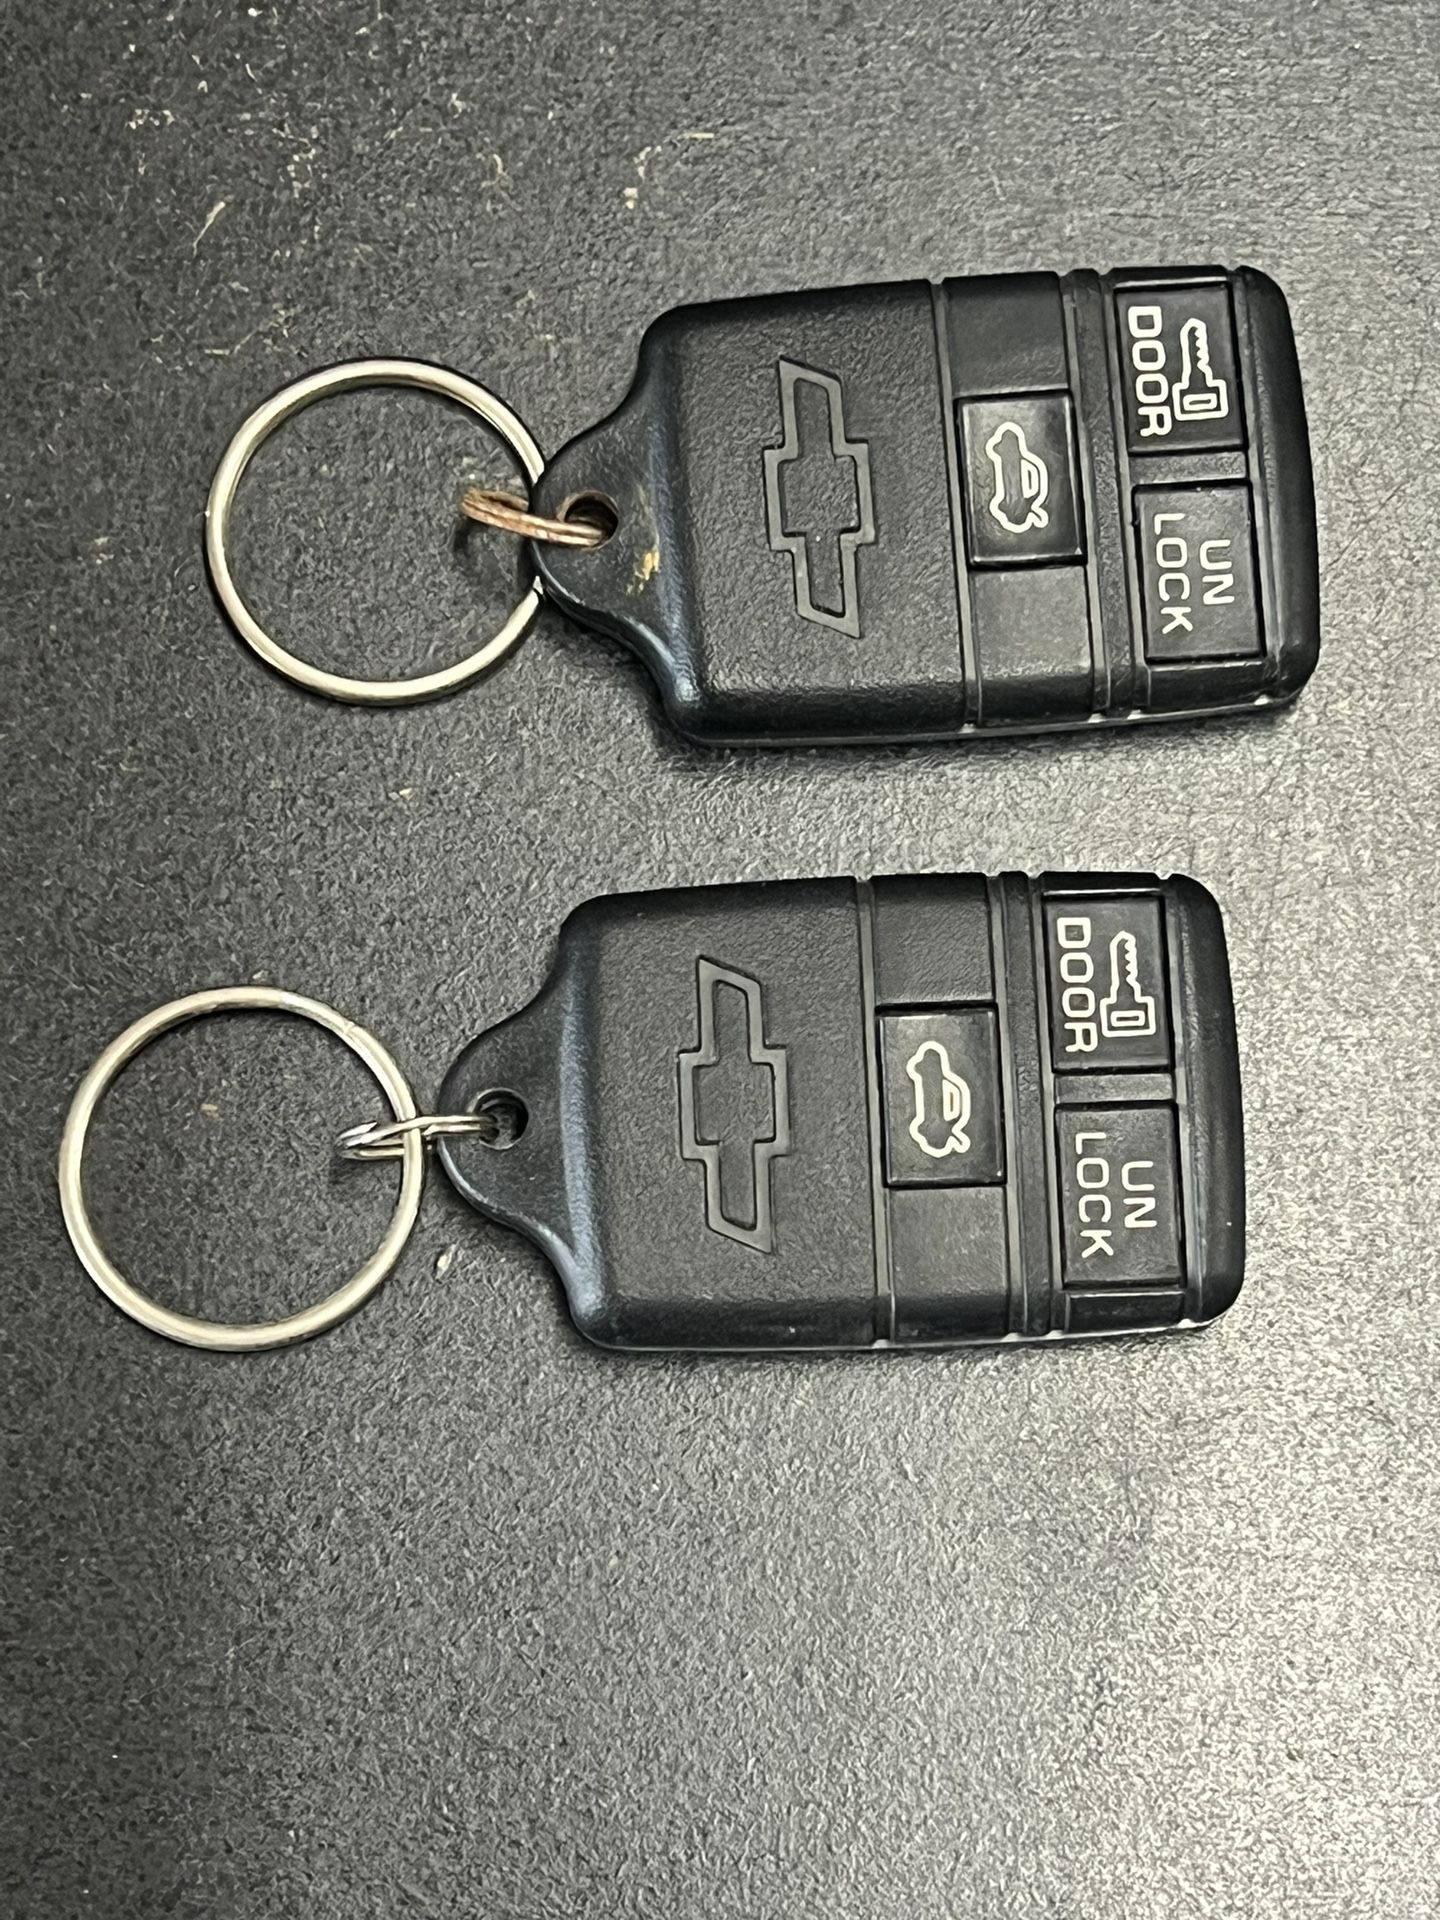 Lot of 2 TRW Chevy Chevrolet Key Fobs ABO 0104T 